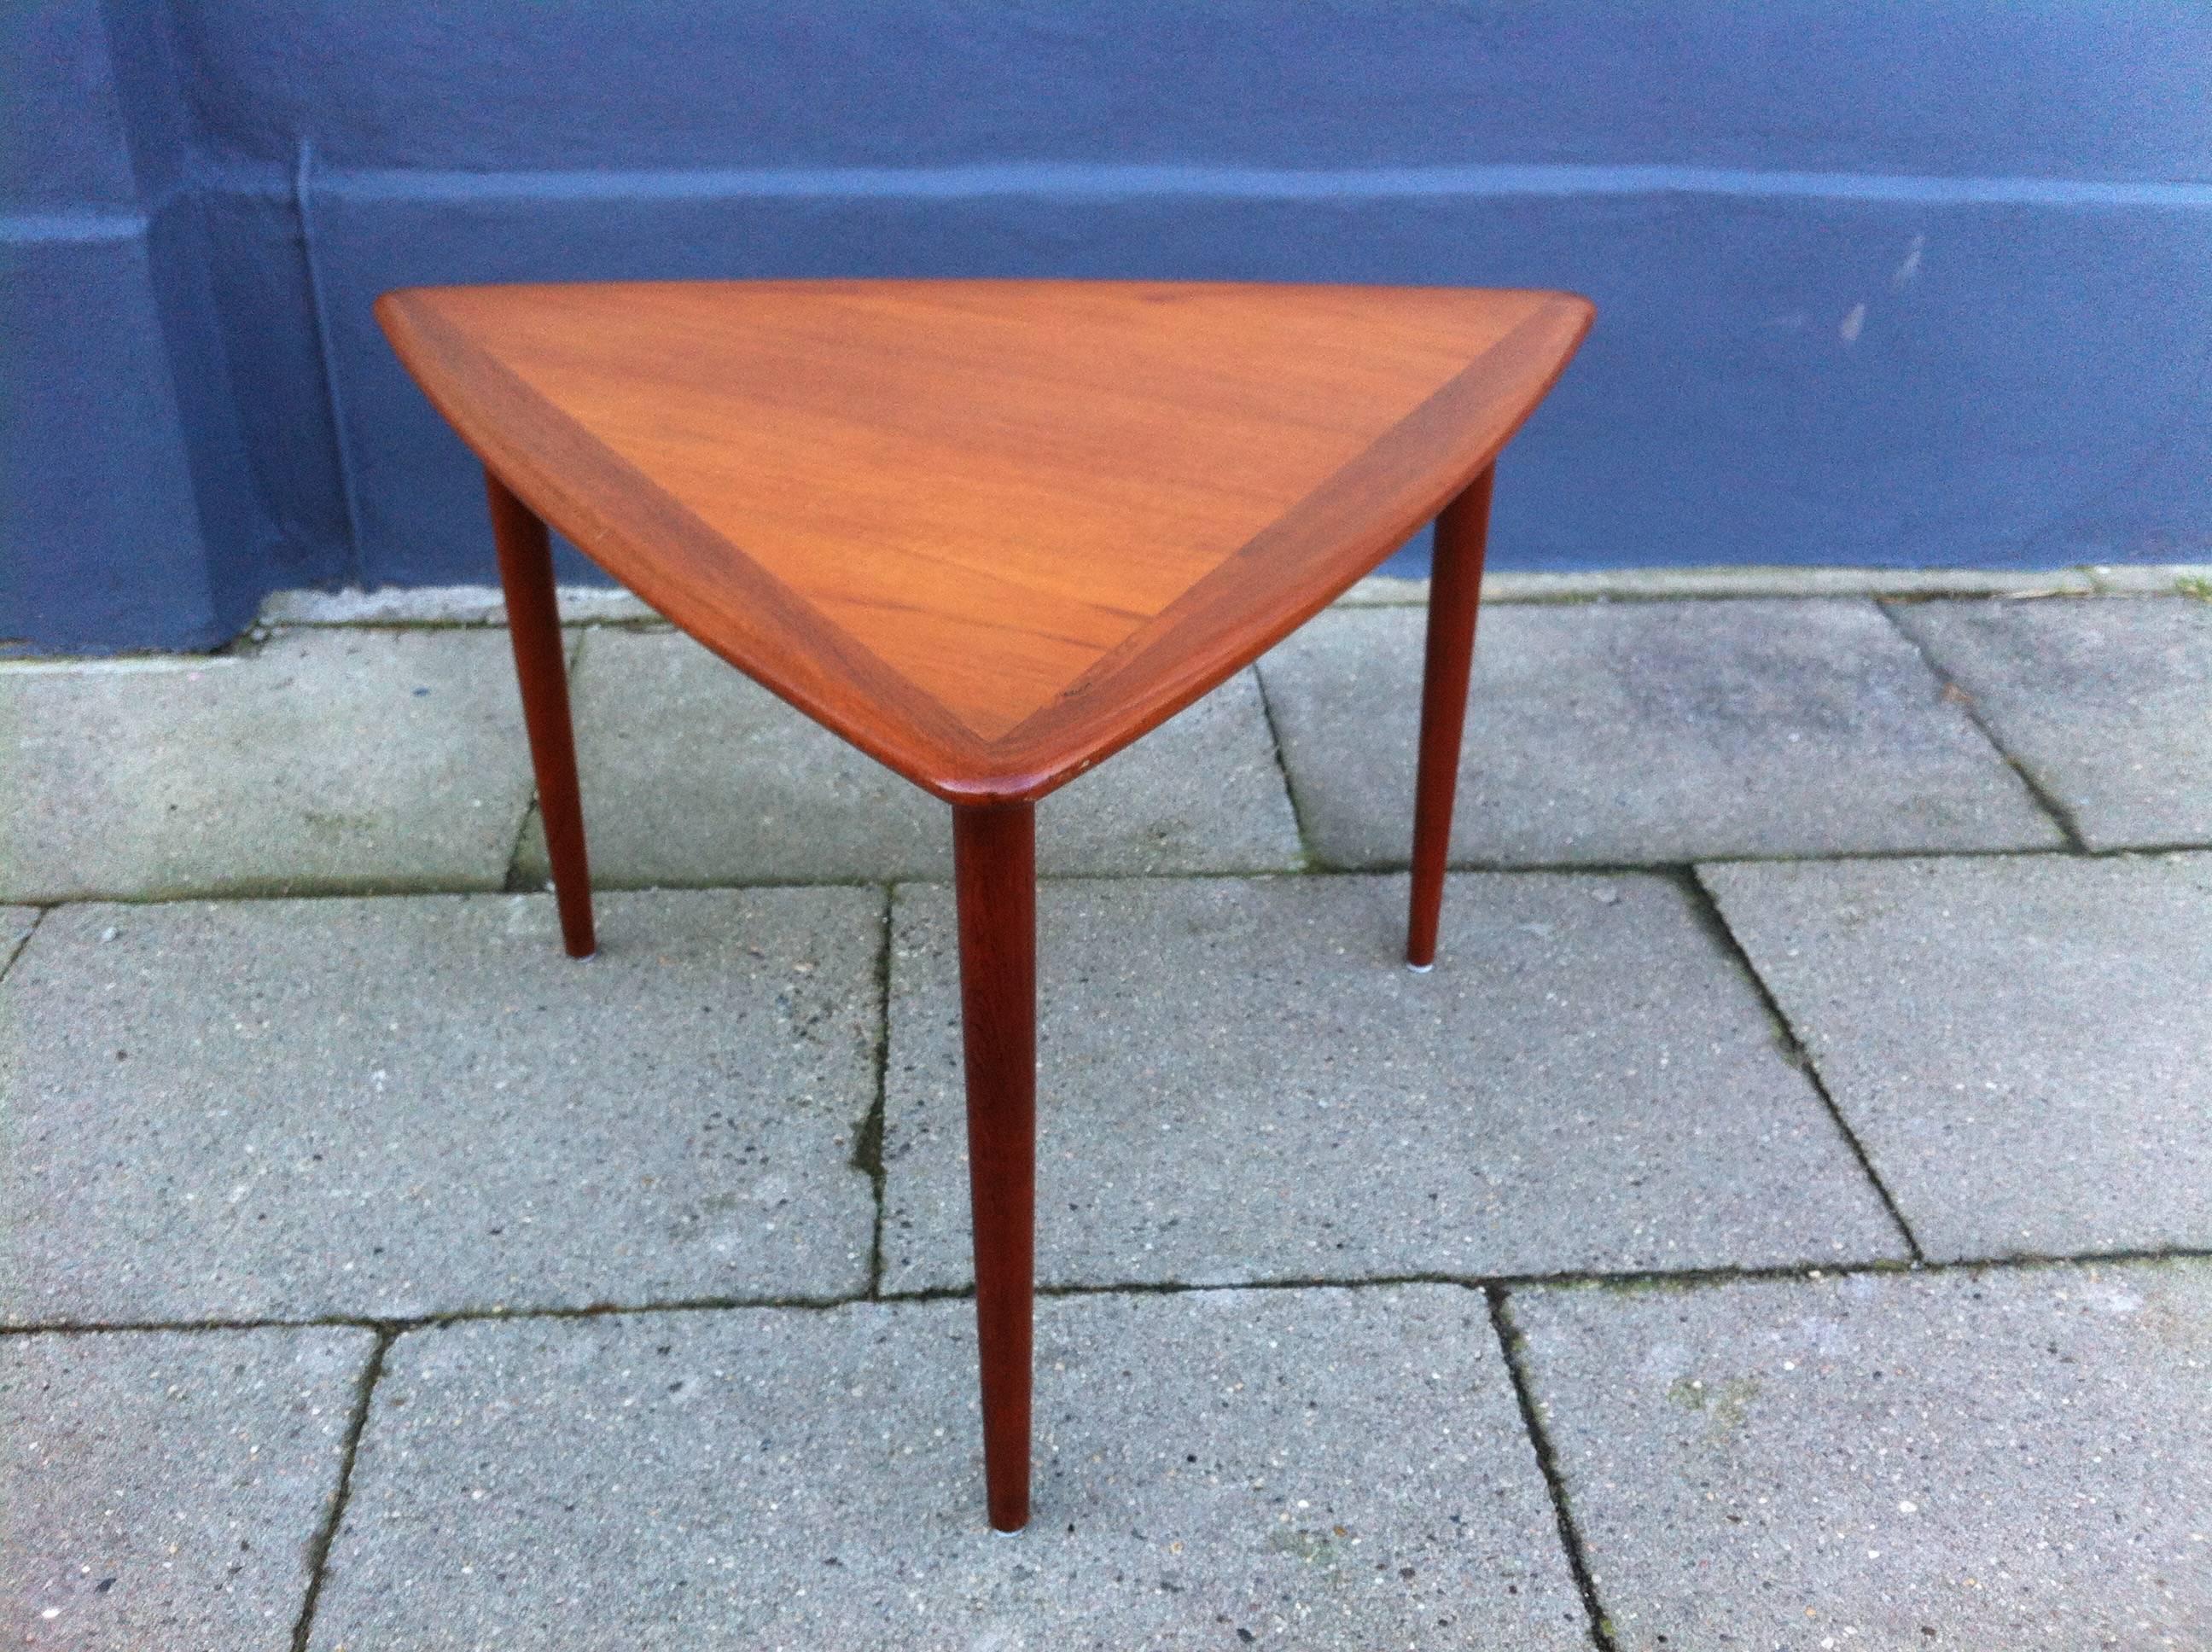 triangular shaped table